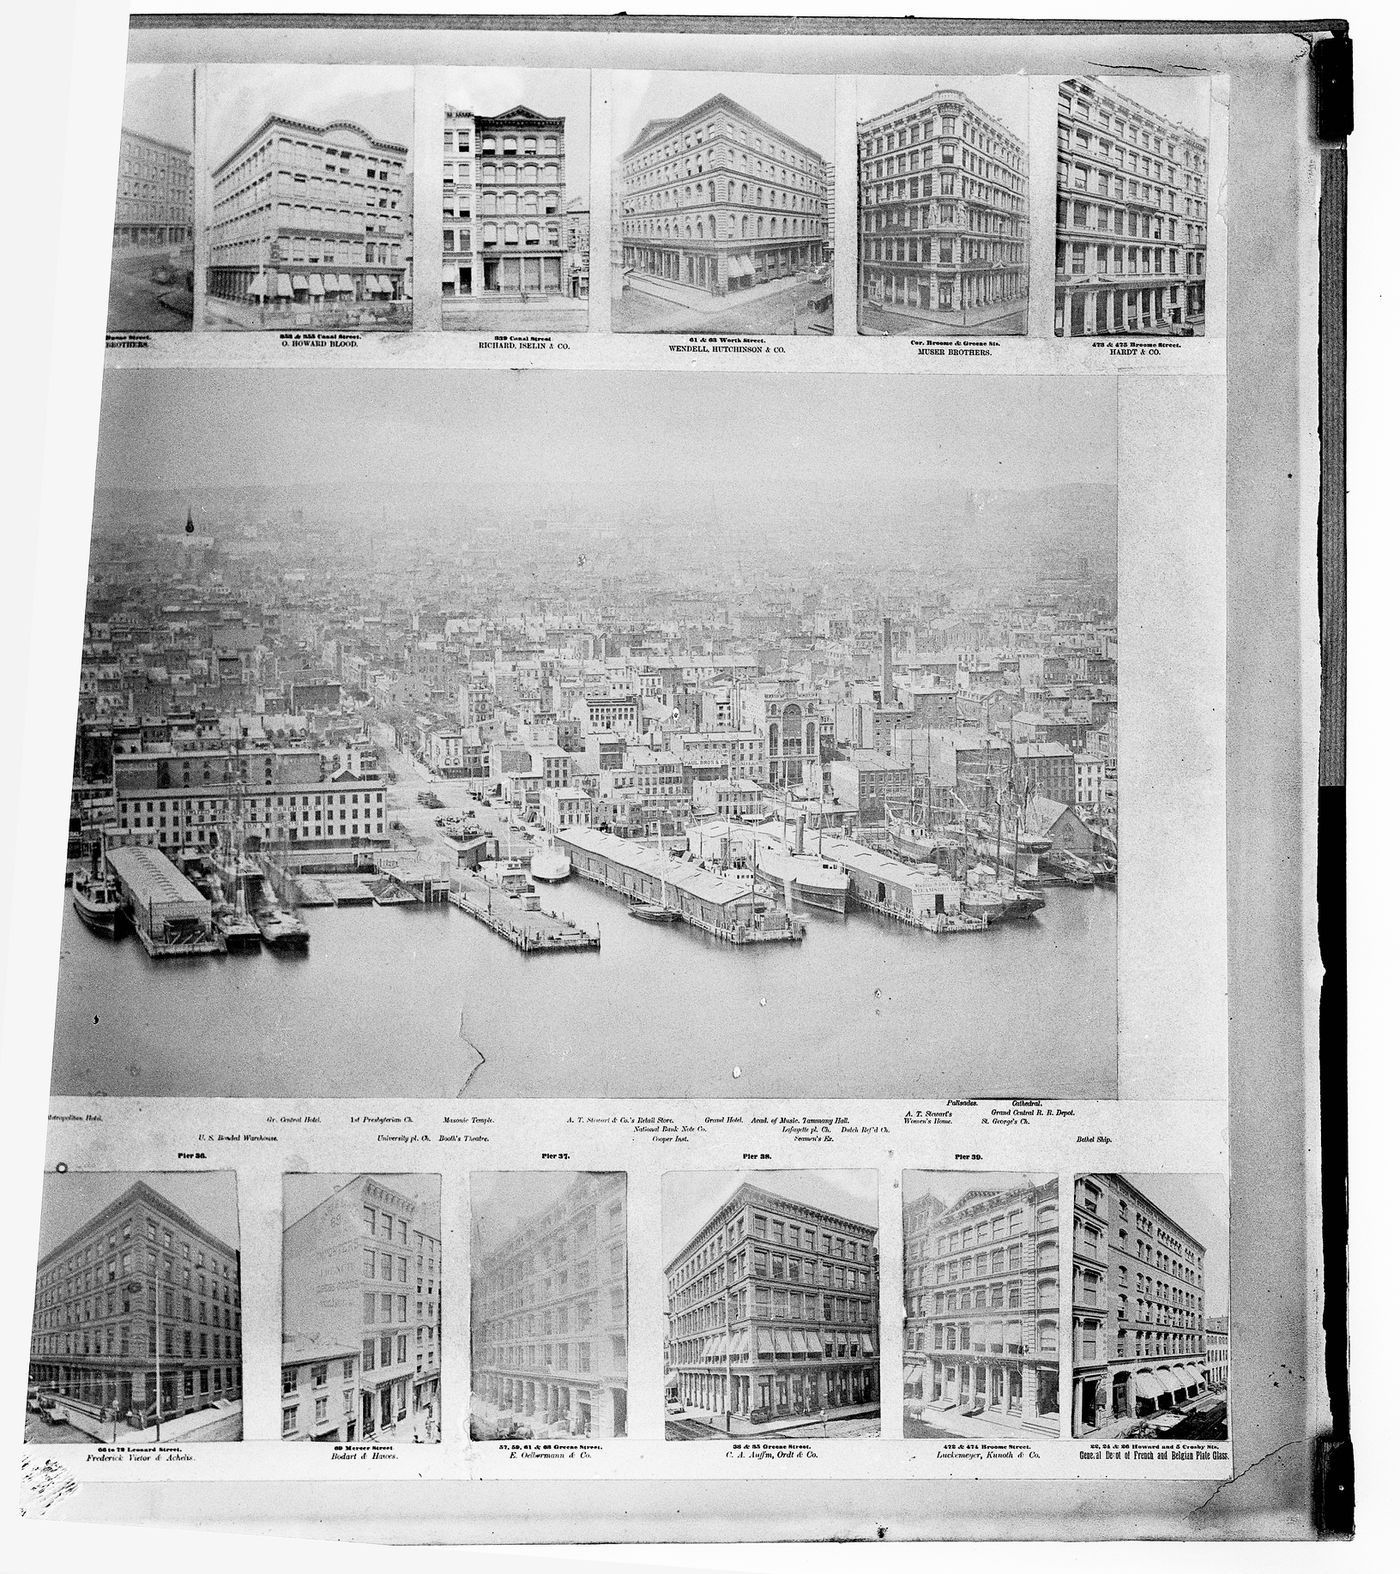 Beale's Photographic view of New York City, New York